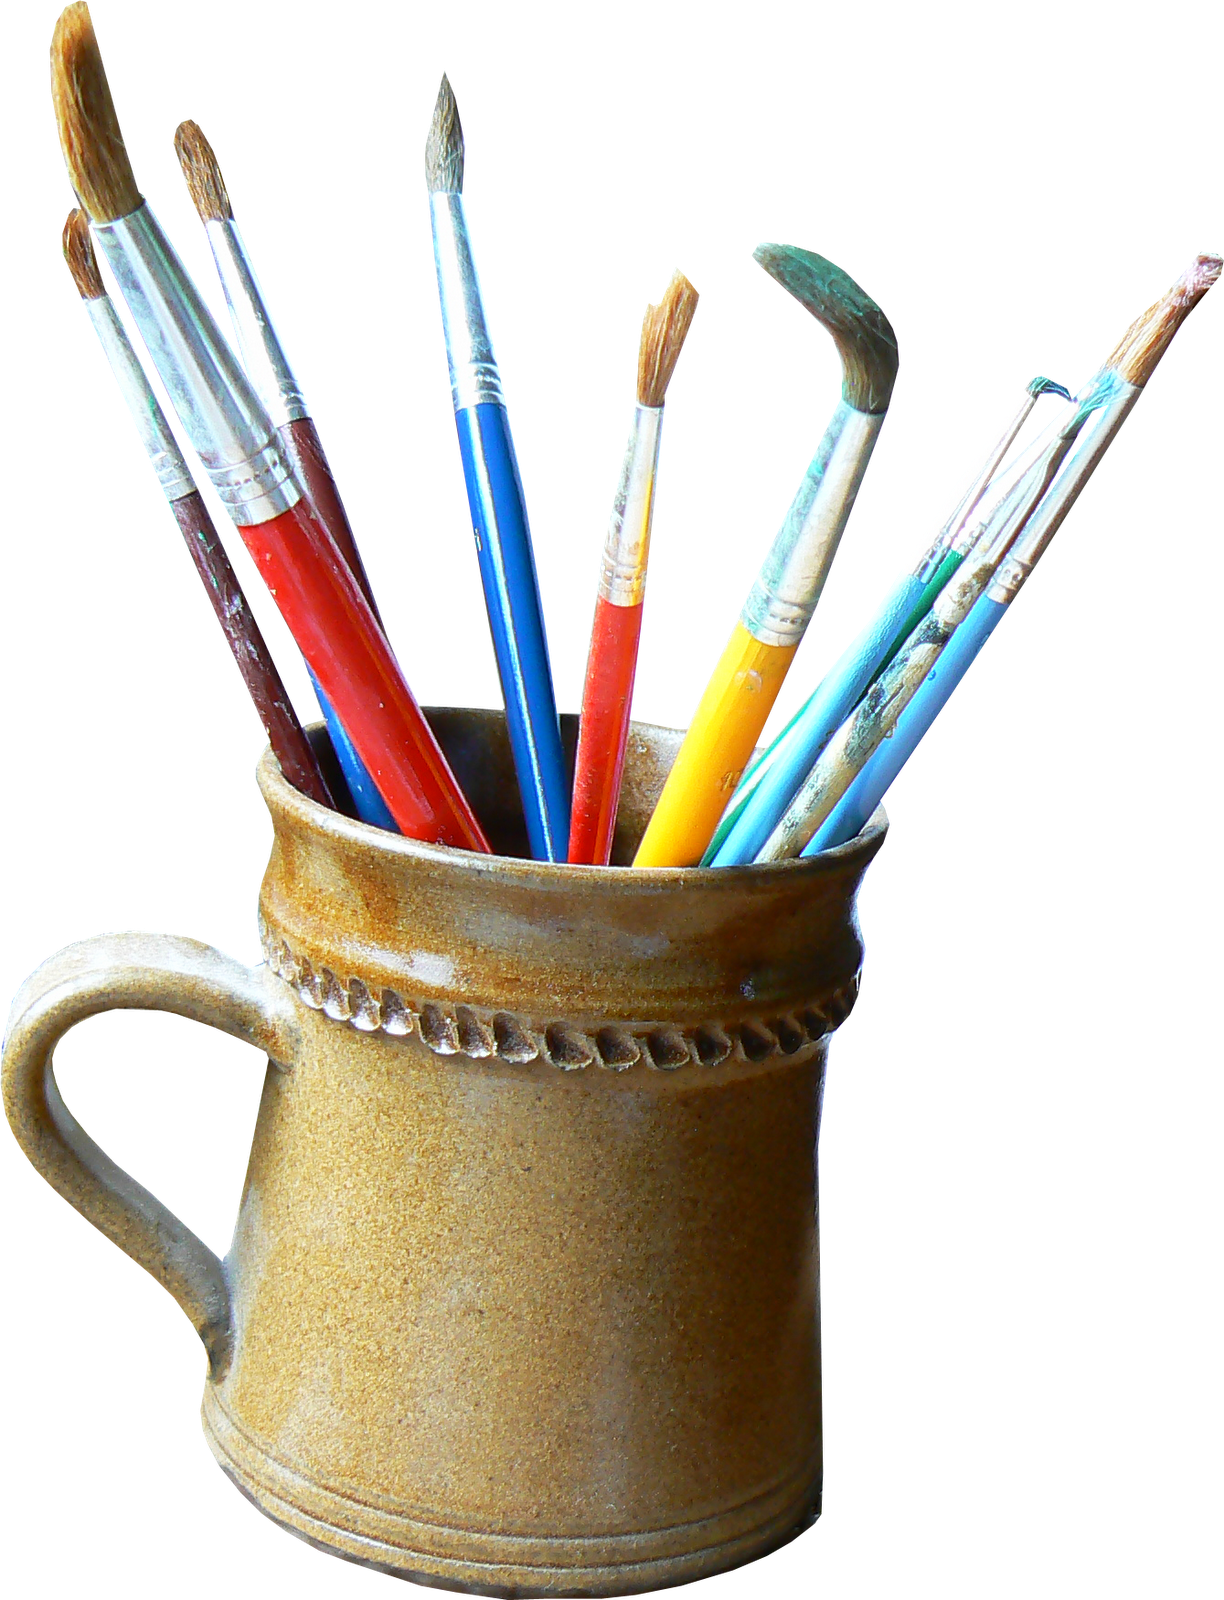 Pencils brushes. Стакан с кисточками. Кисть карандашом. Кисти и краски. Кисти краски карандаши.